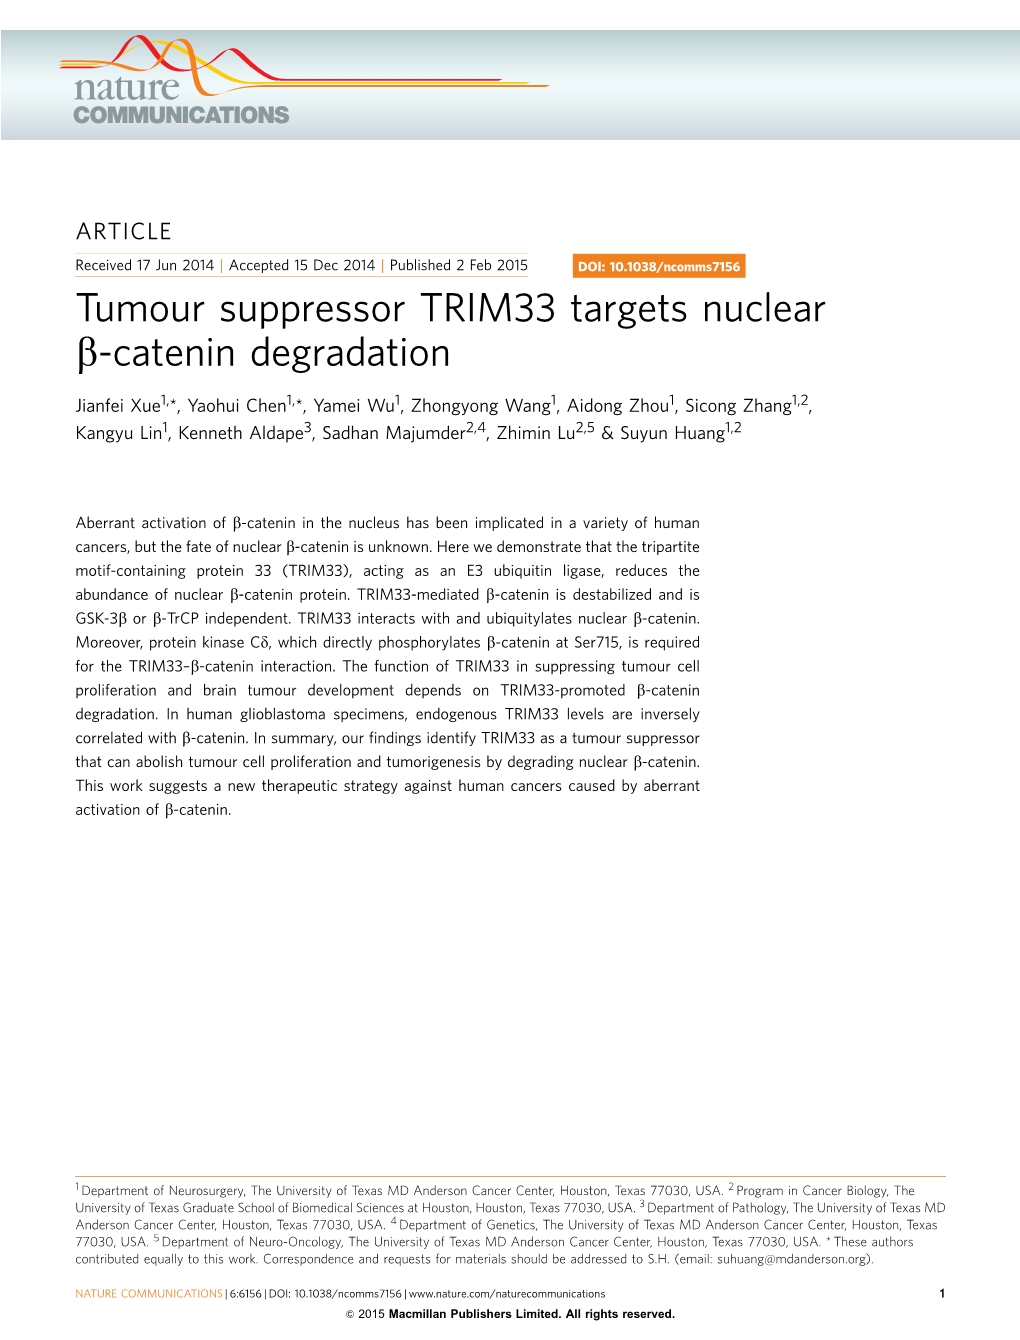 Tumour Suppressor TRIM33 Targets Nuclear &Beta;-Catenin Degradation